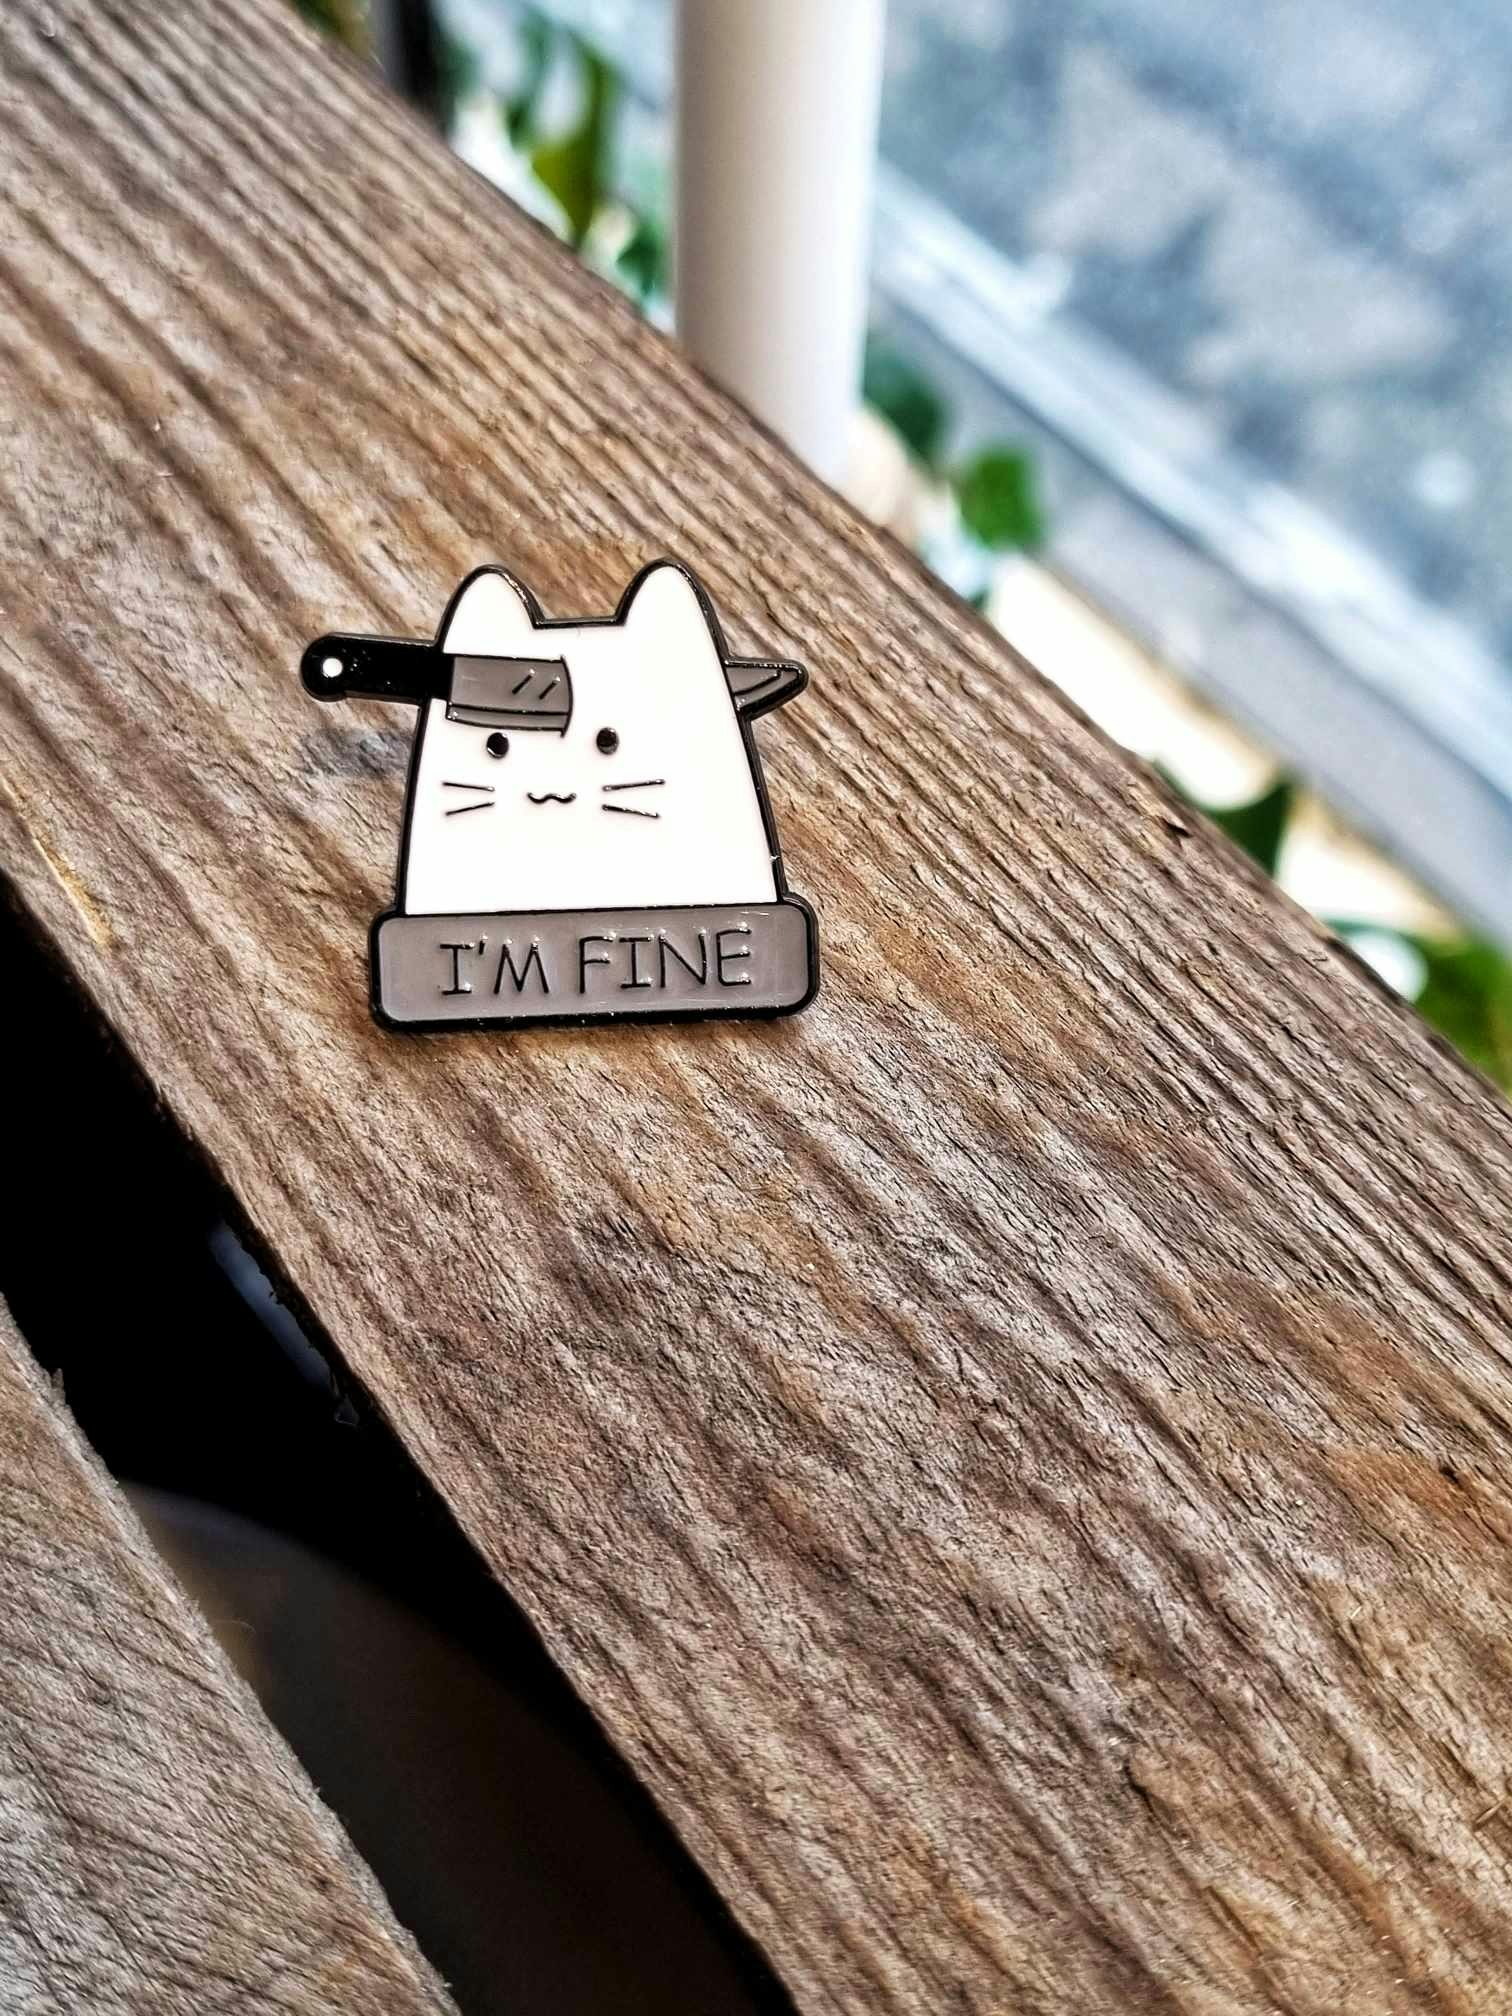 Pin: I'm fine